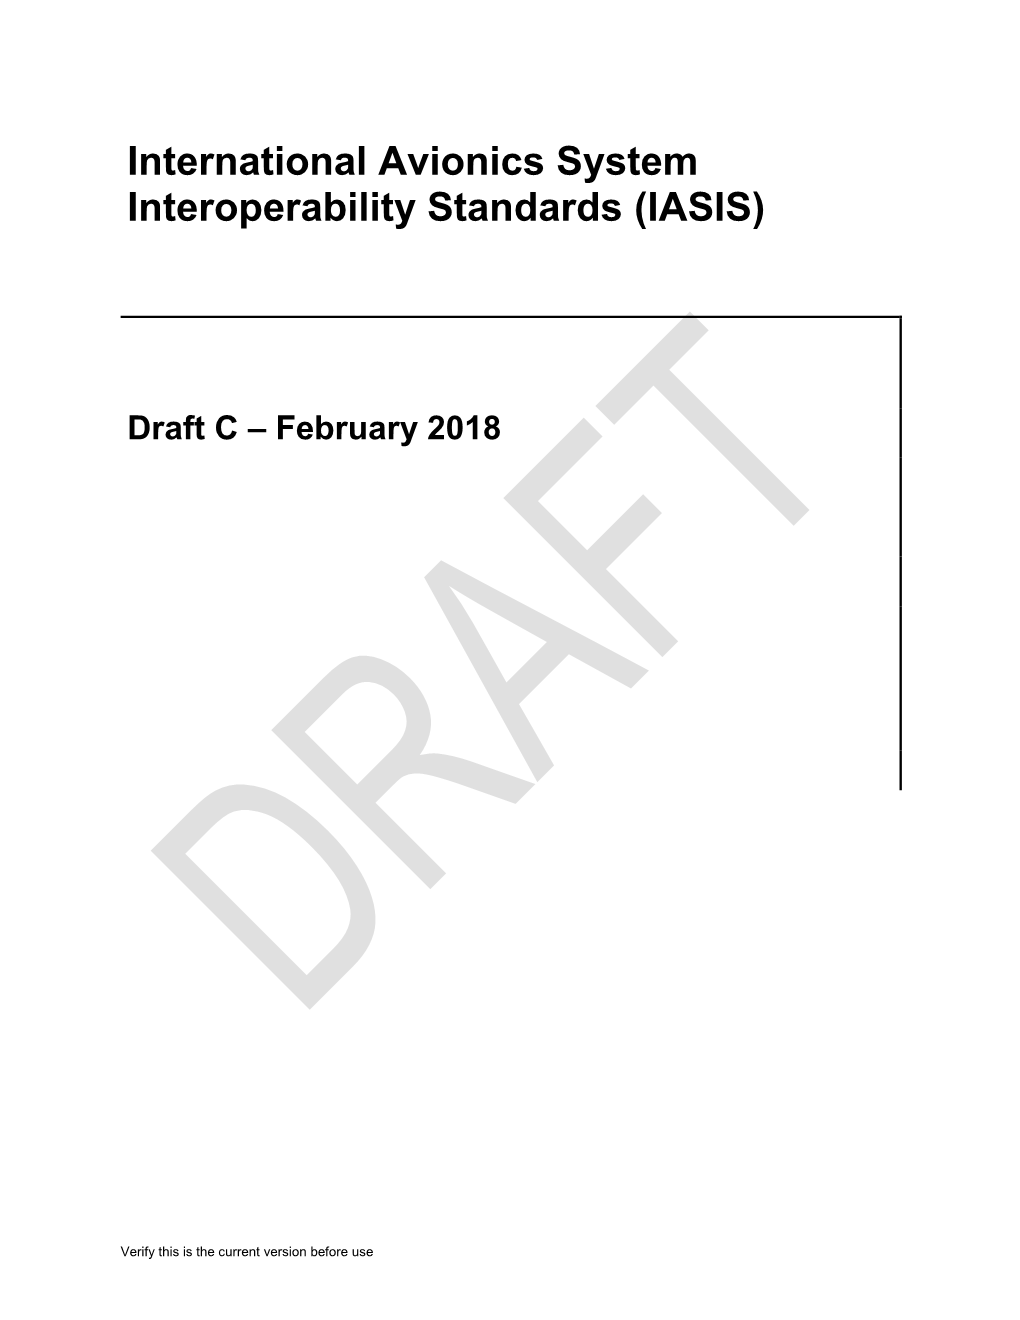 International Avionics System Interoperability Standards (IASIS)